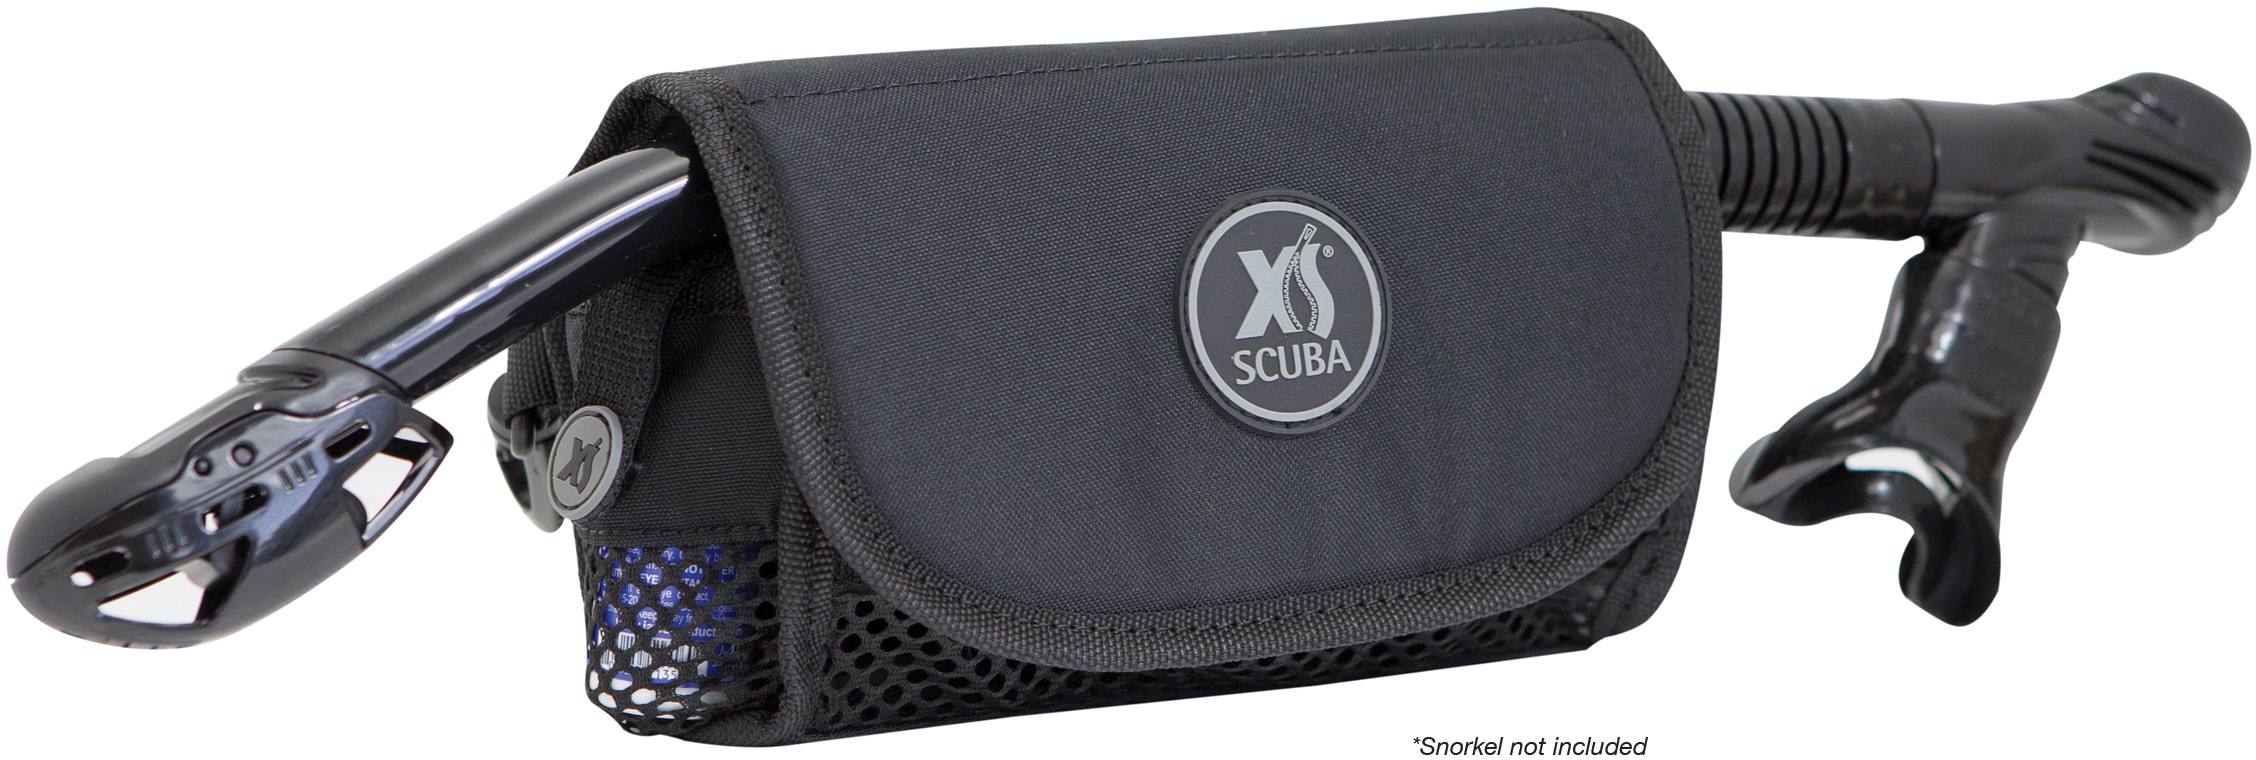 XS Scuba Protective Mask Bag